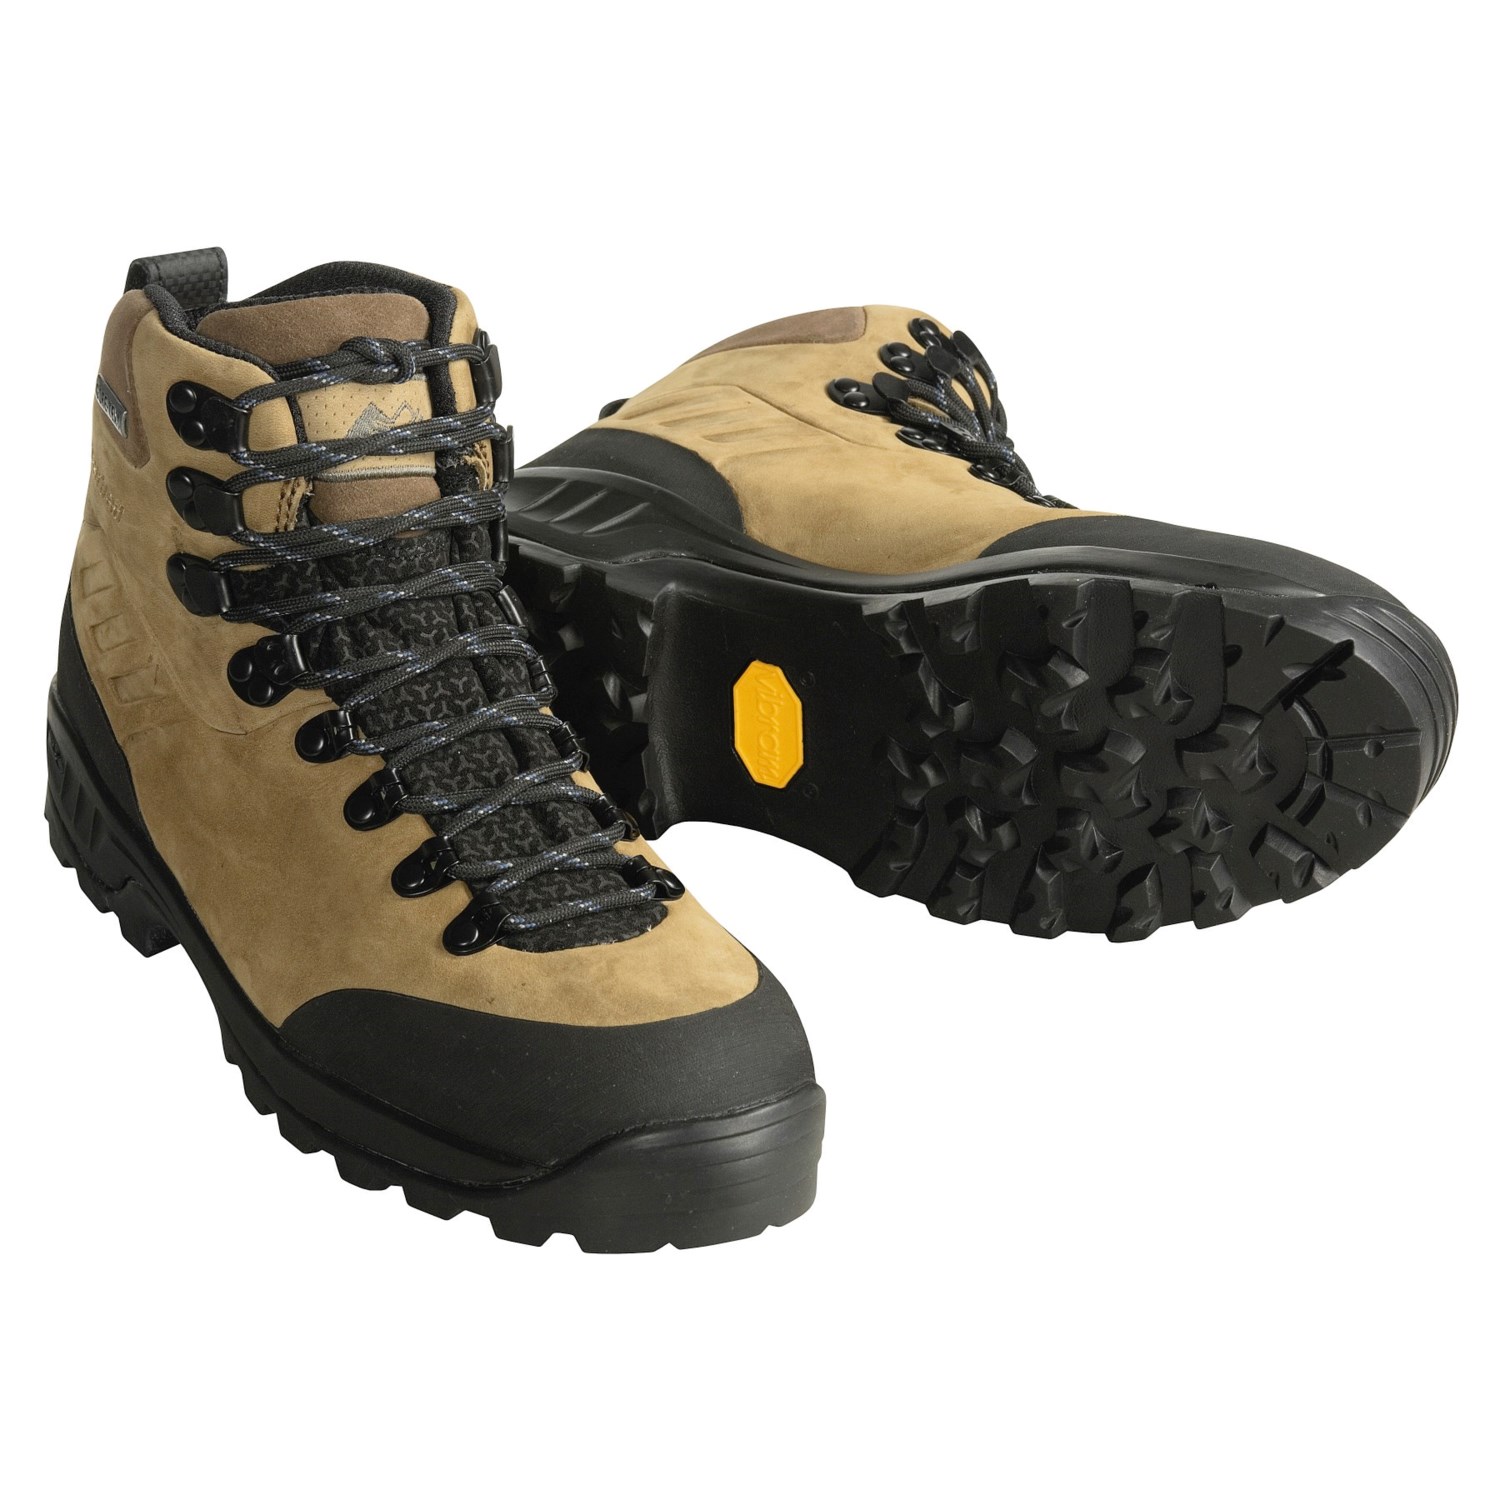 Montrail Blue Ridge Gore-Tex® Hiking Boots (For Men) 88710 - Save 37%